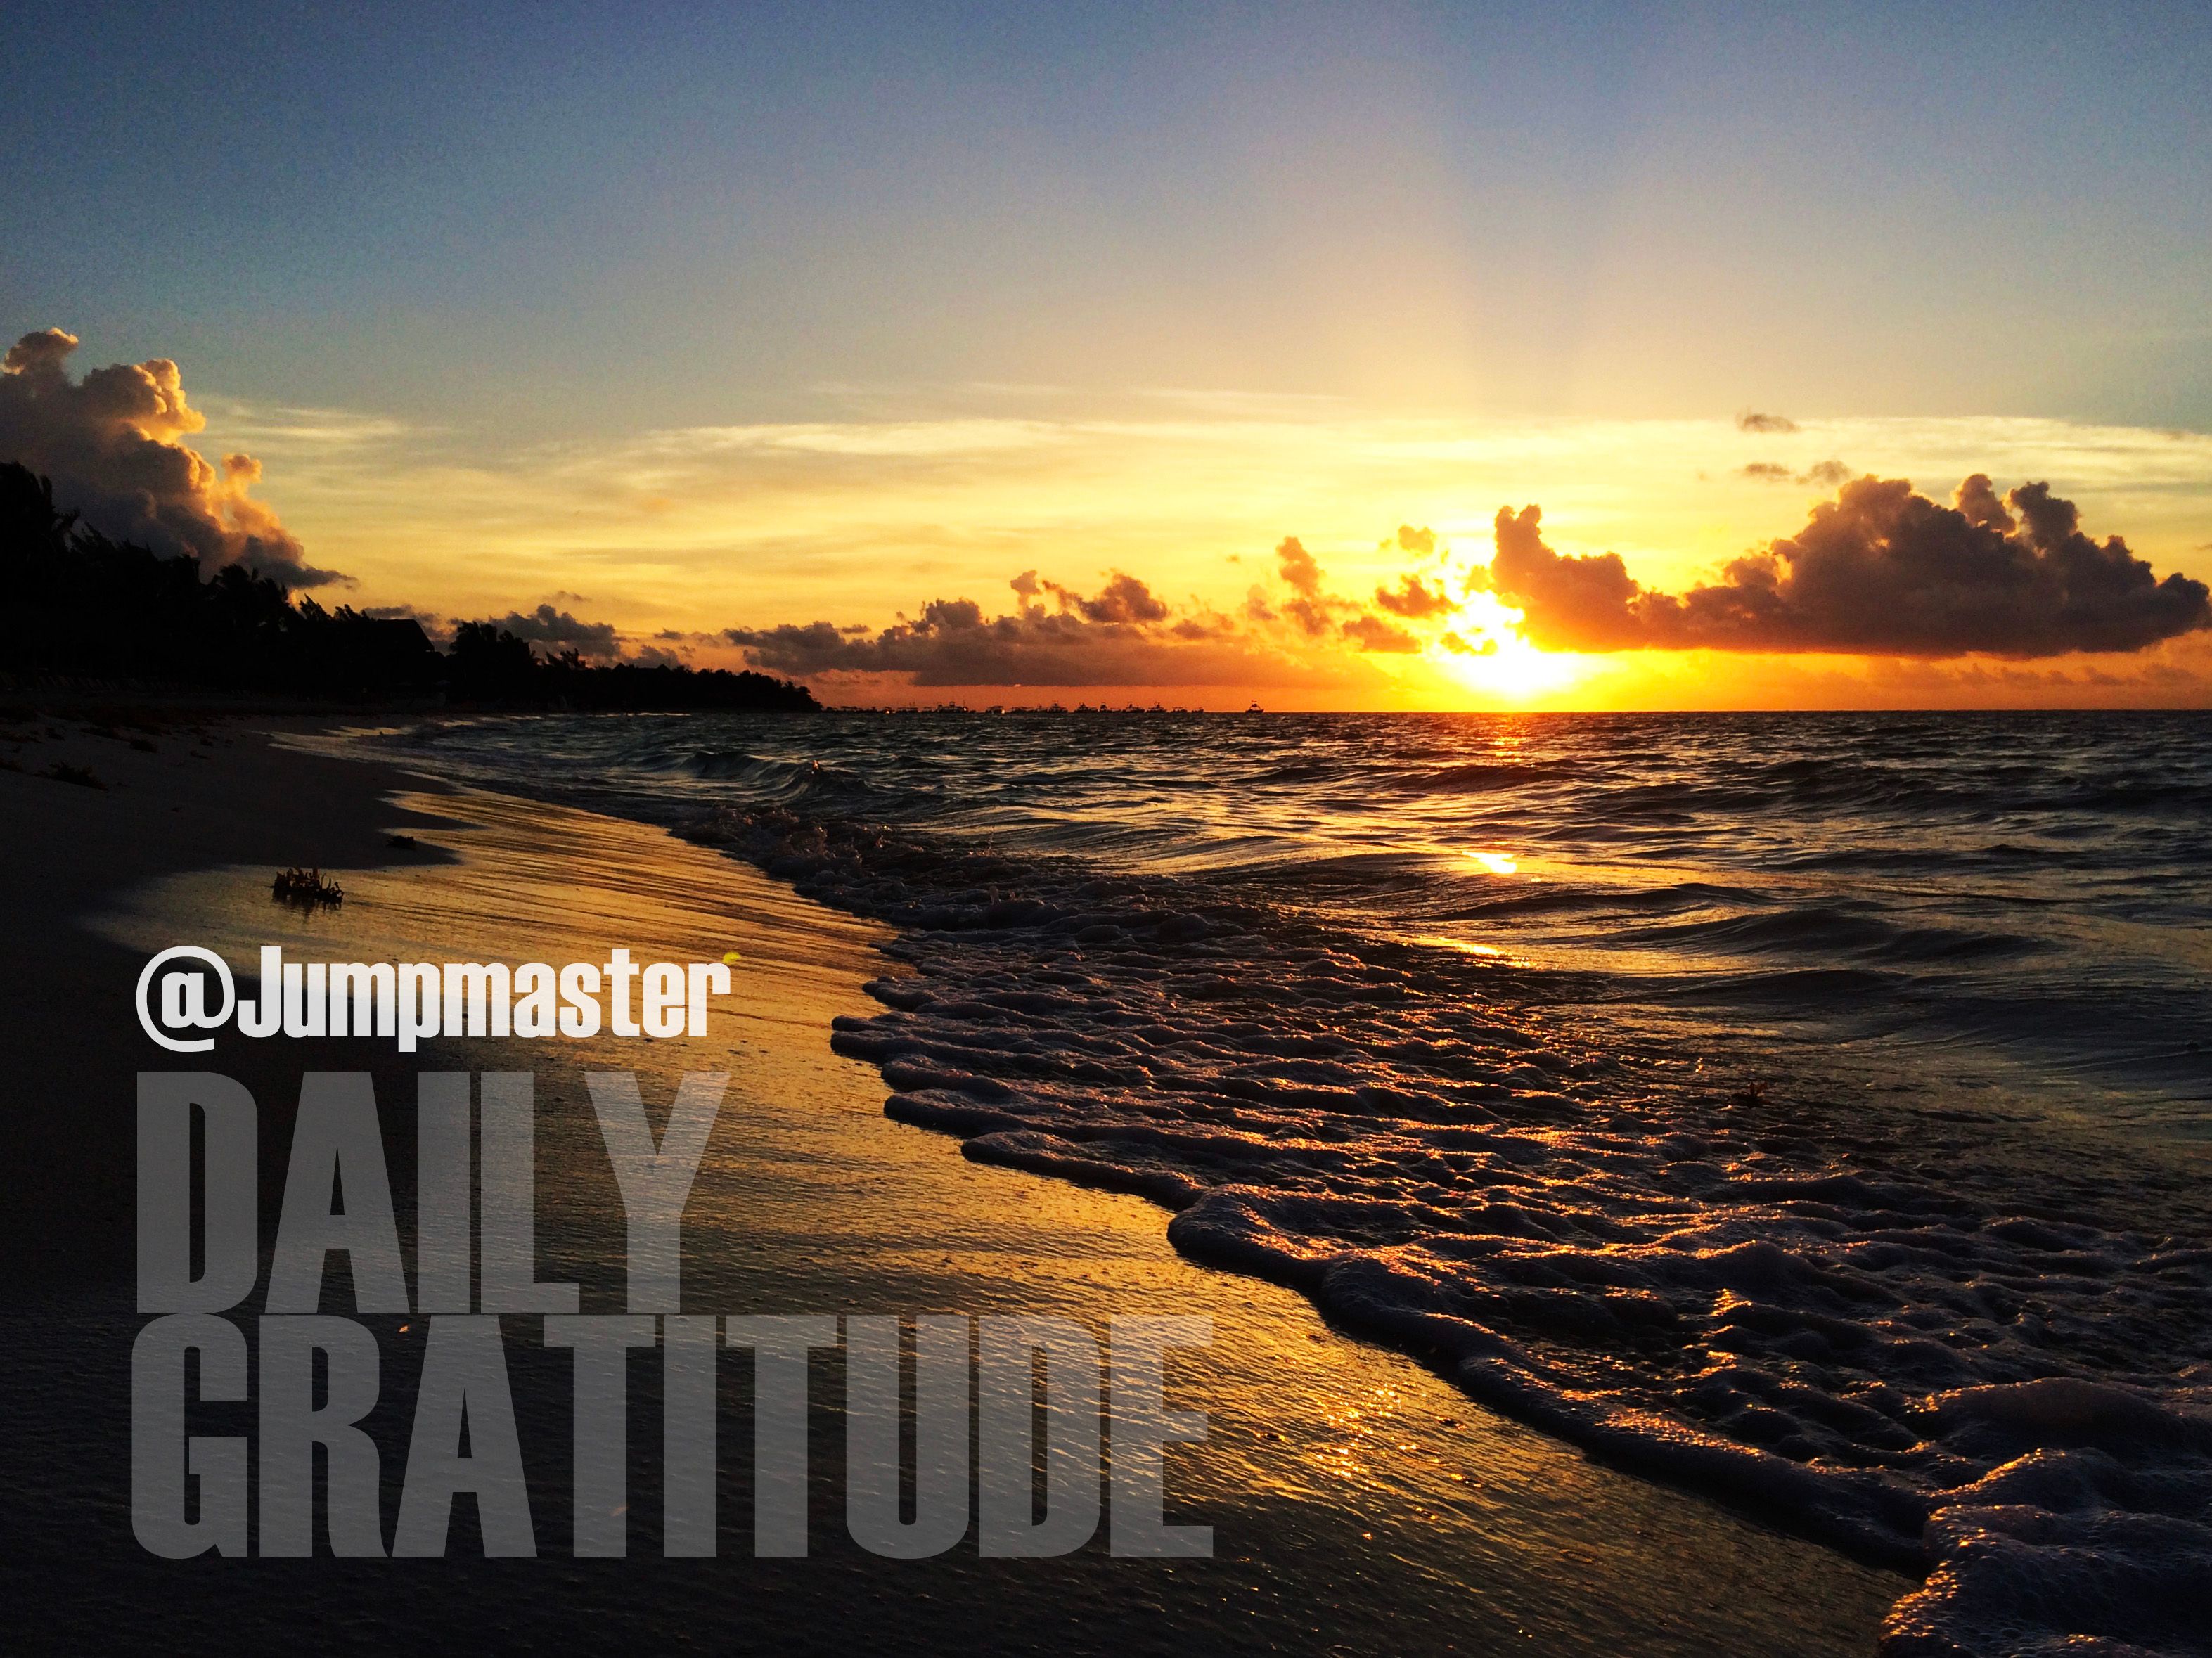 Jumpmaster Daily Gratitude Image.jpg